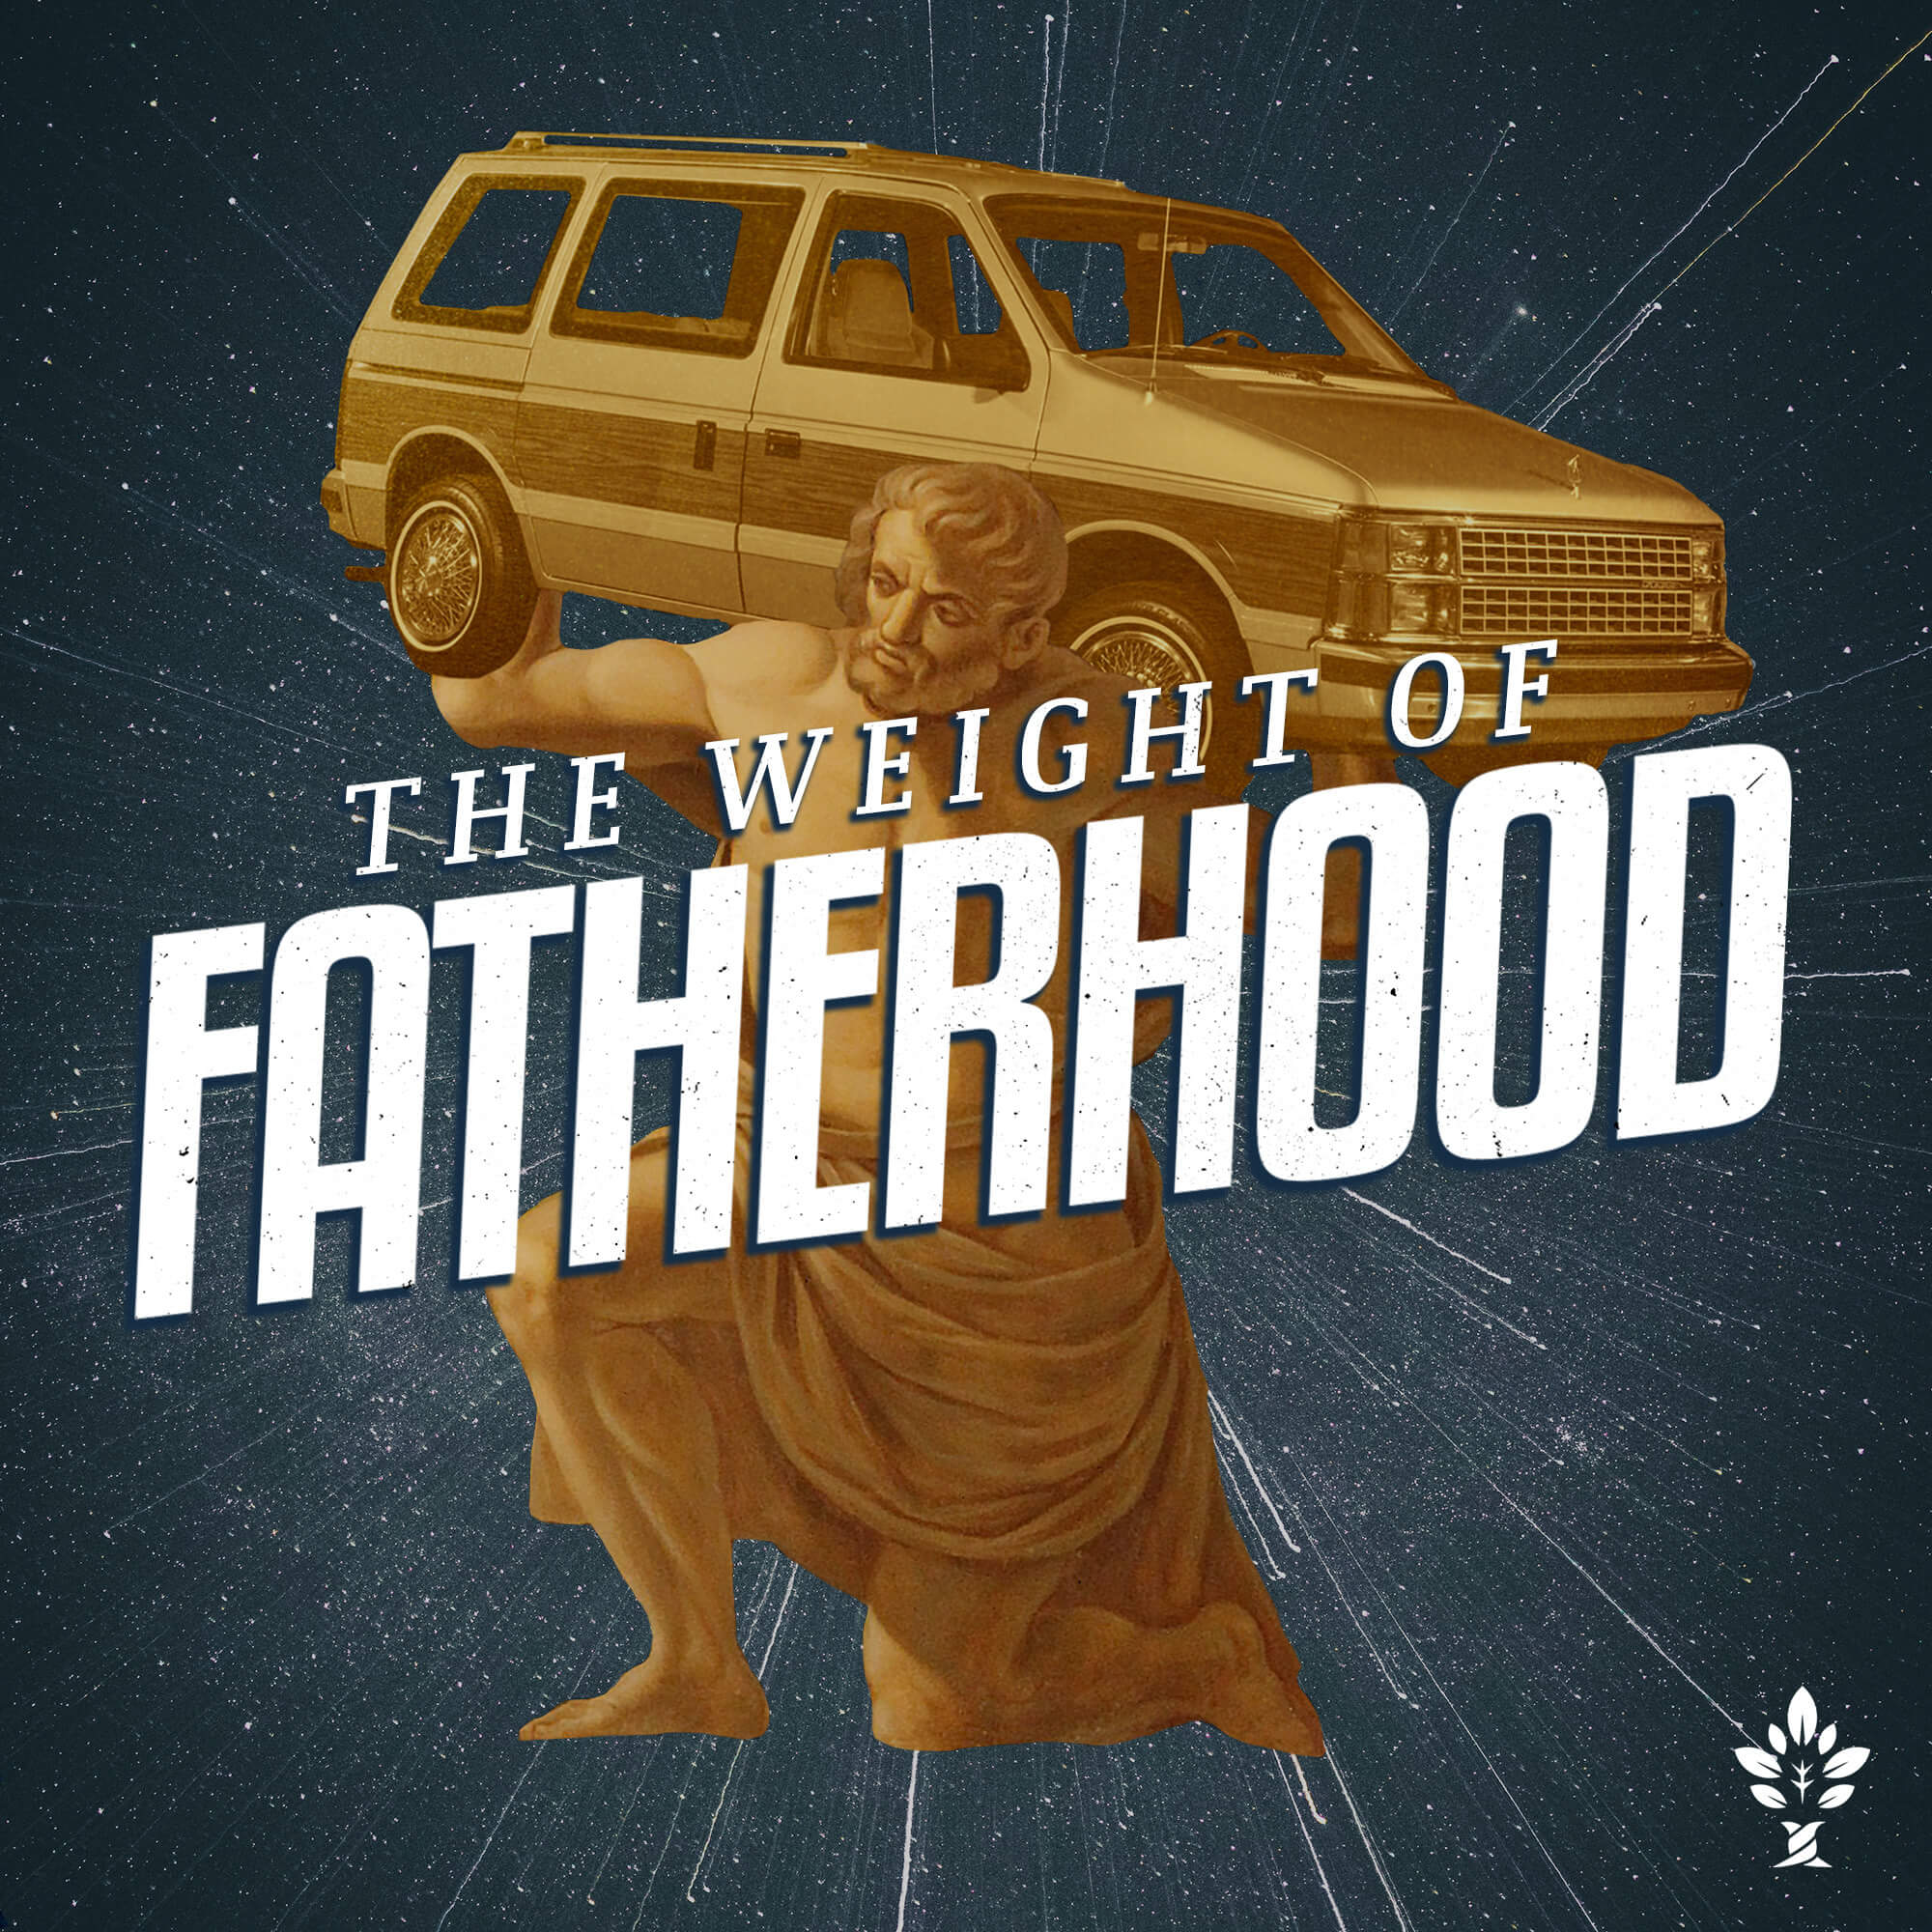 The Weight of Fatherhood